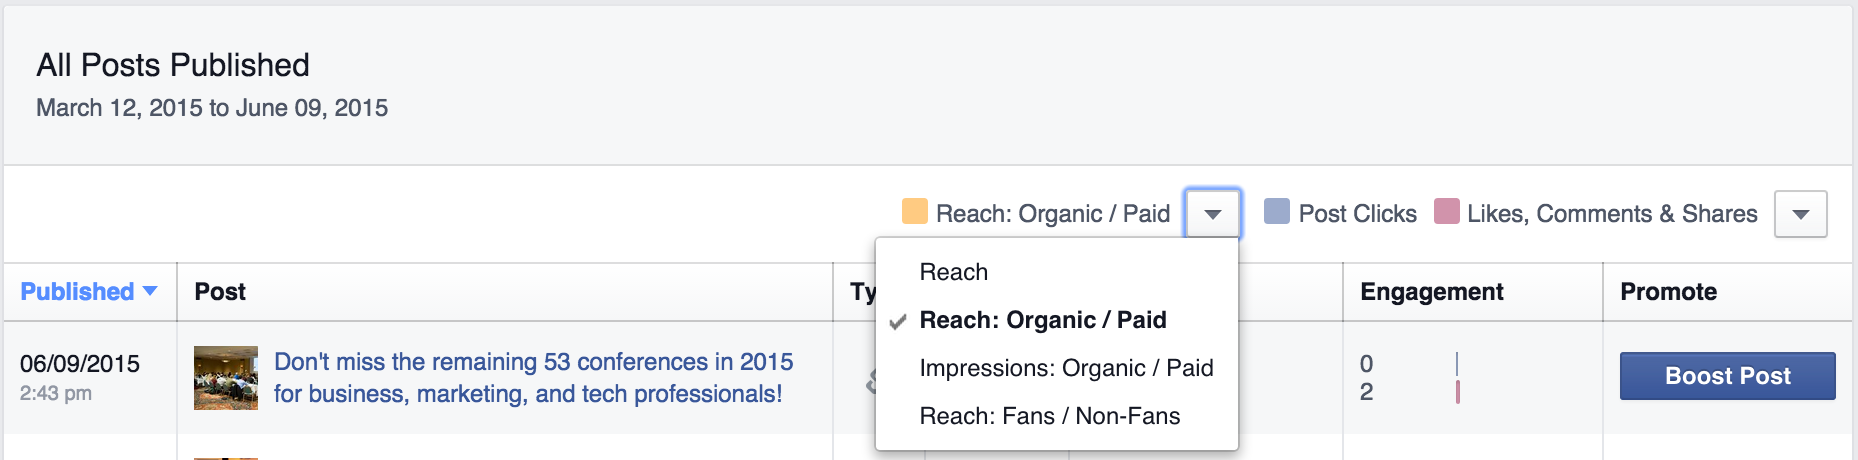 facebook metrics organic paid reach screenshot